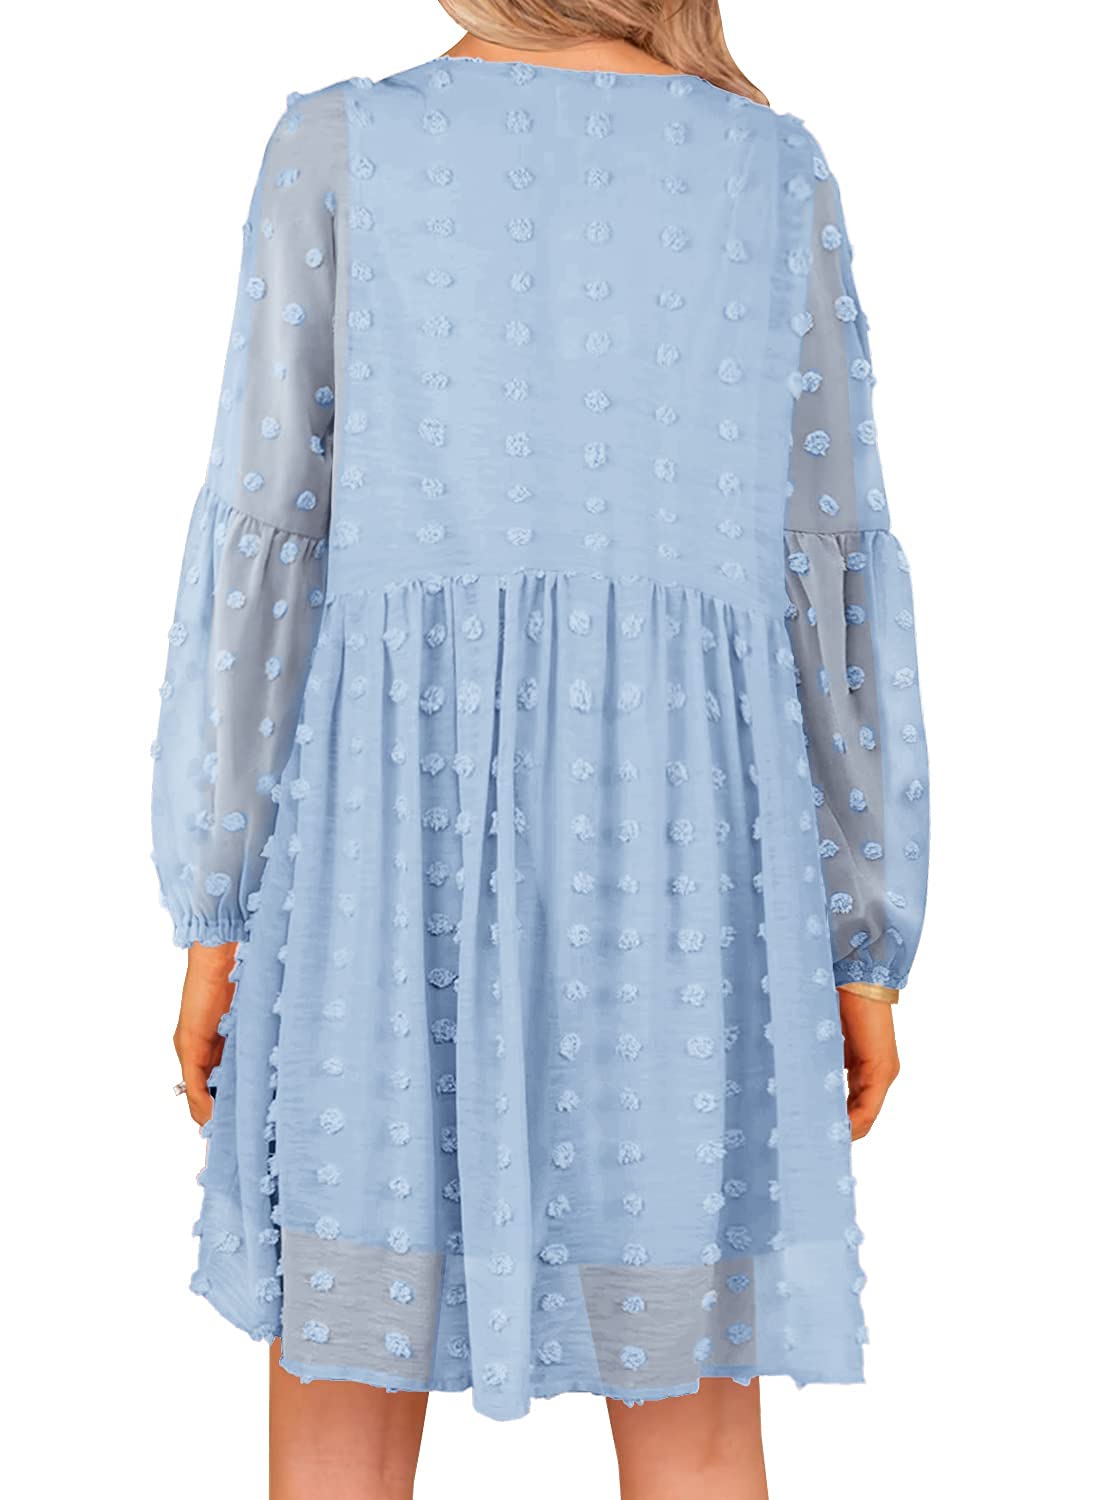 MIHOLL Women's V Neck Short Sleeve Ruffle Loose Summer Flowy Mini Dress